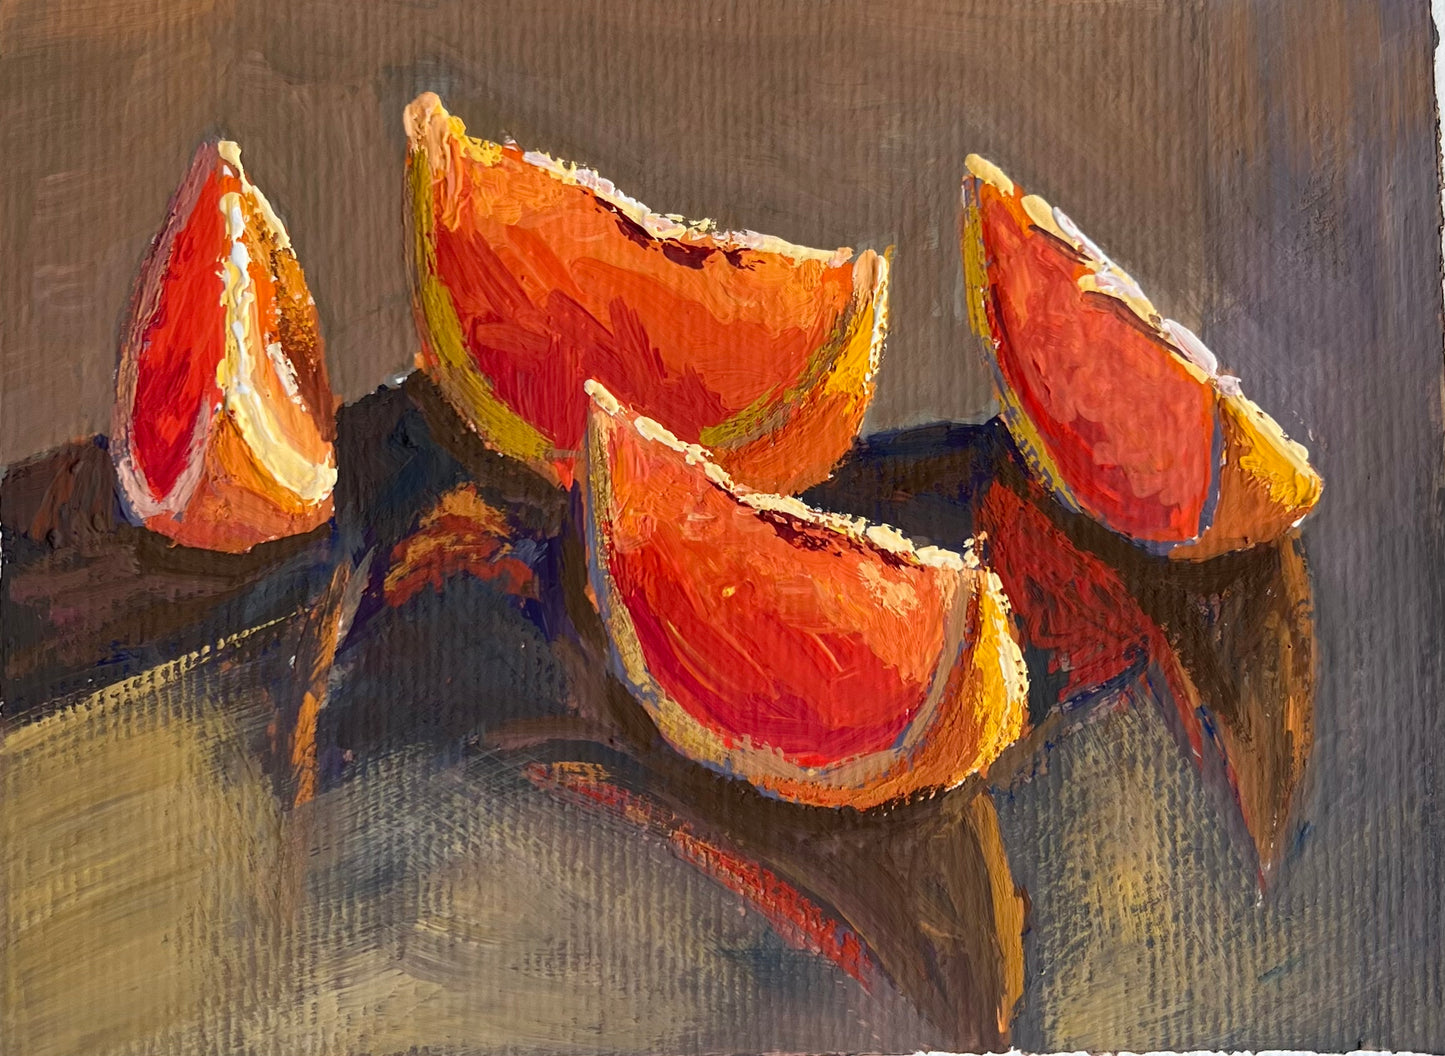 Gouache Painting - Grapefruit slices on black